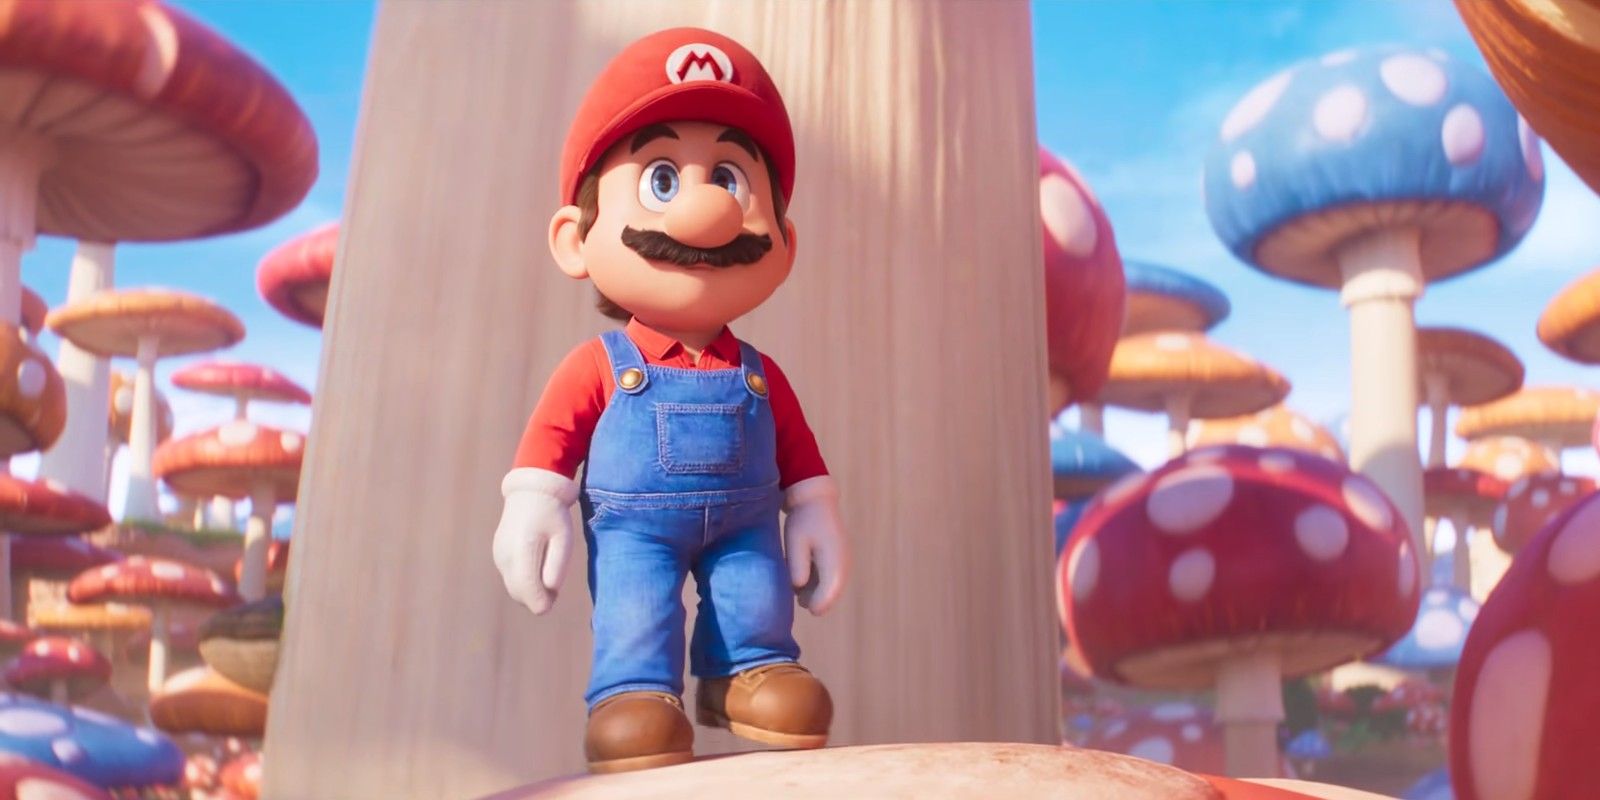 Mario standing in Mushroom Kingdom in The Super Mario Bros. Movie 